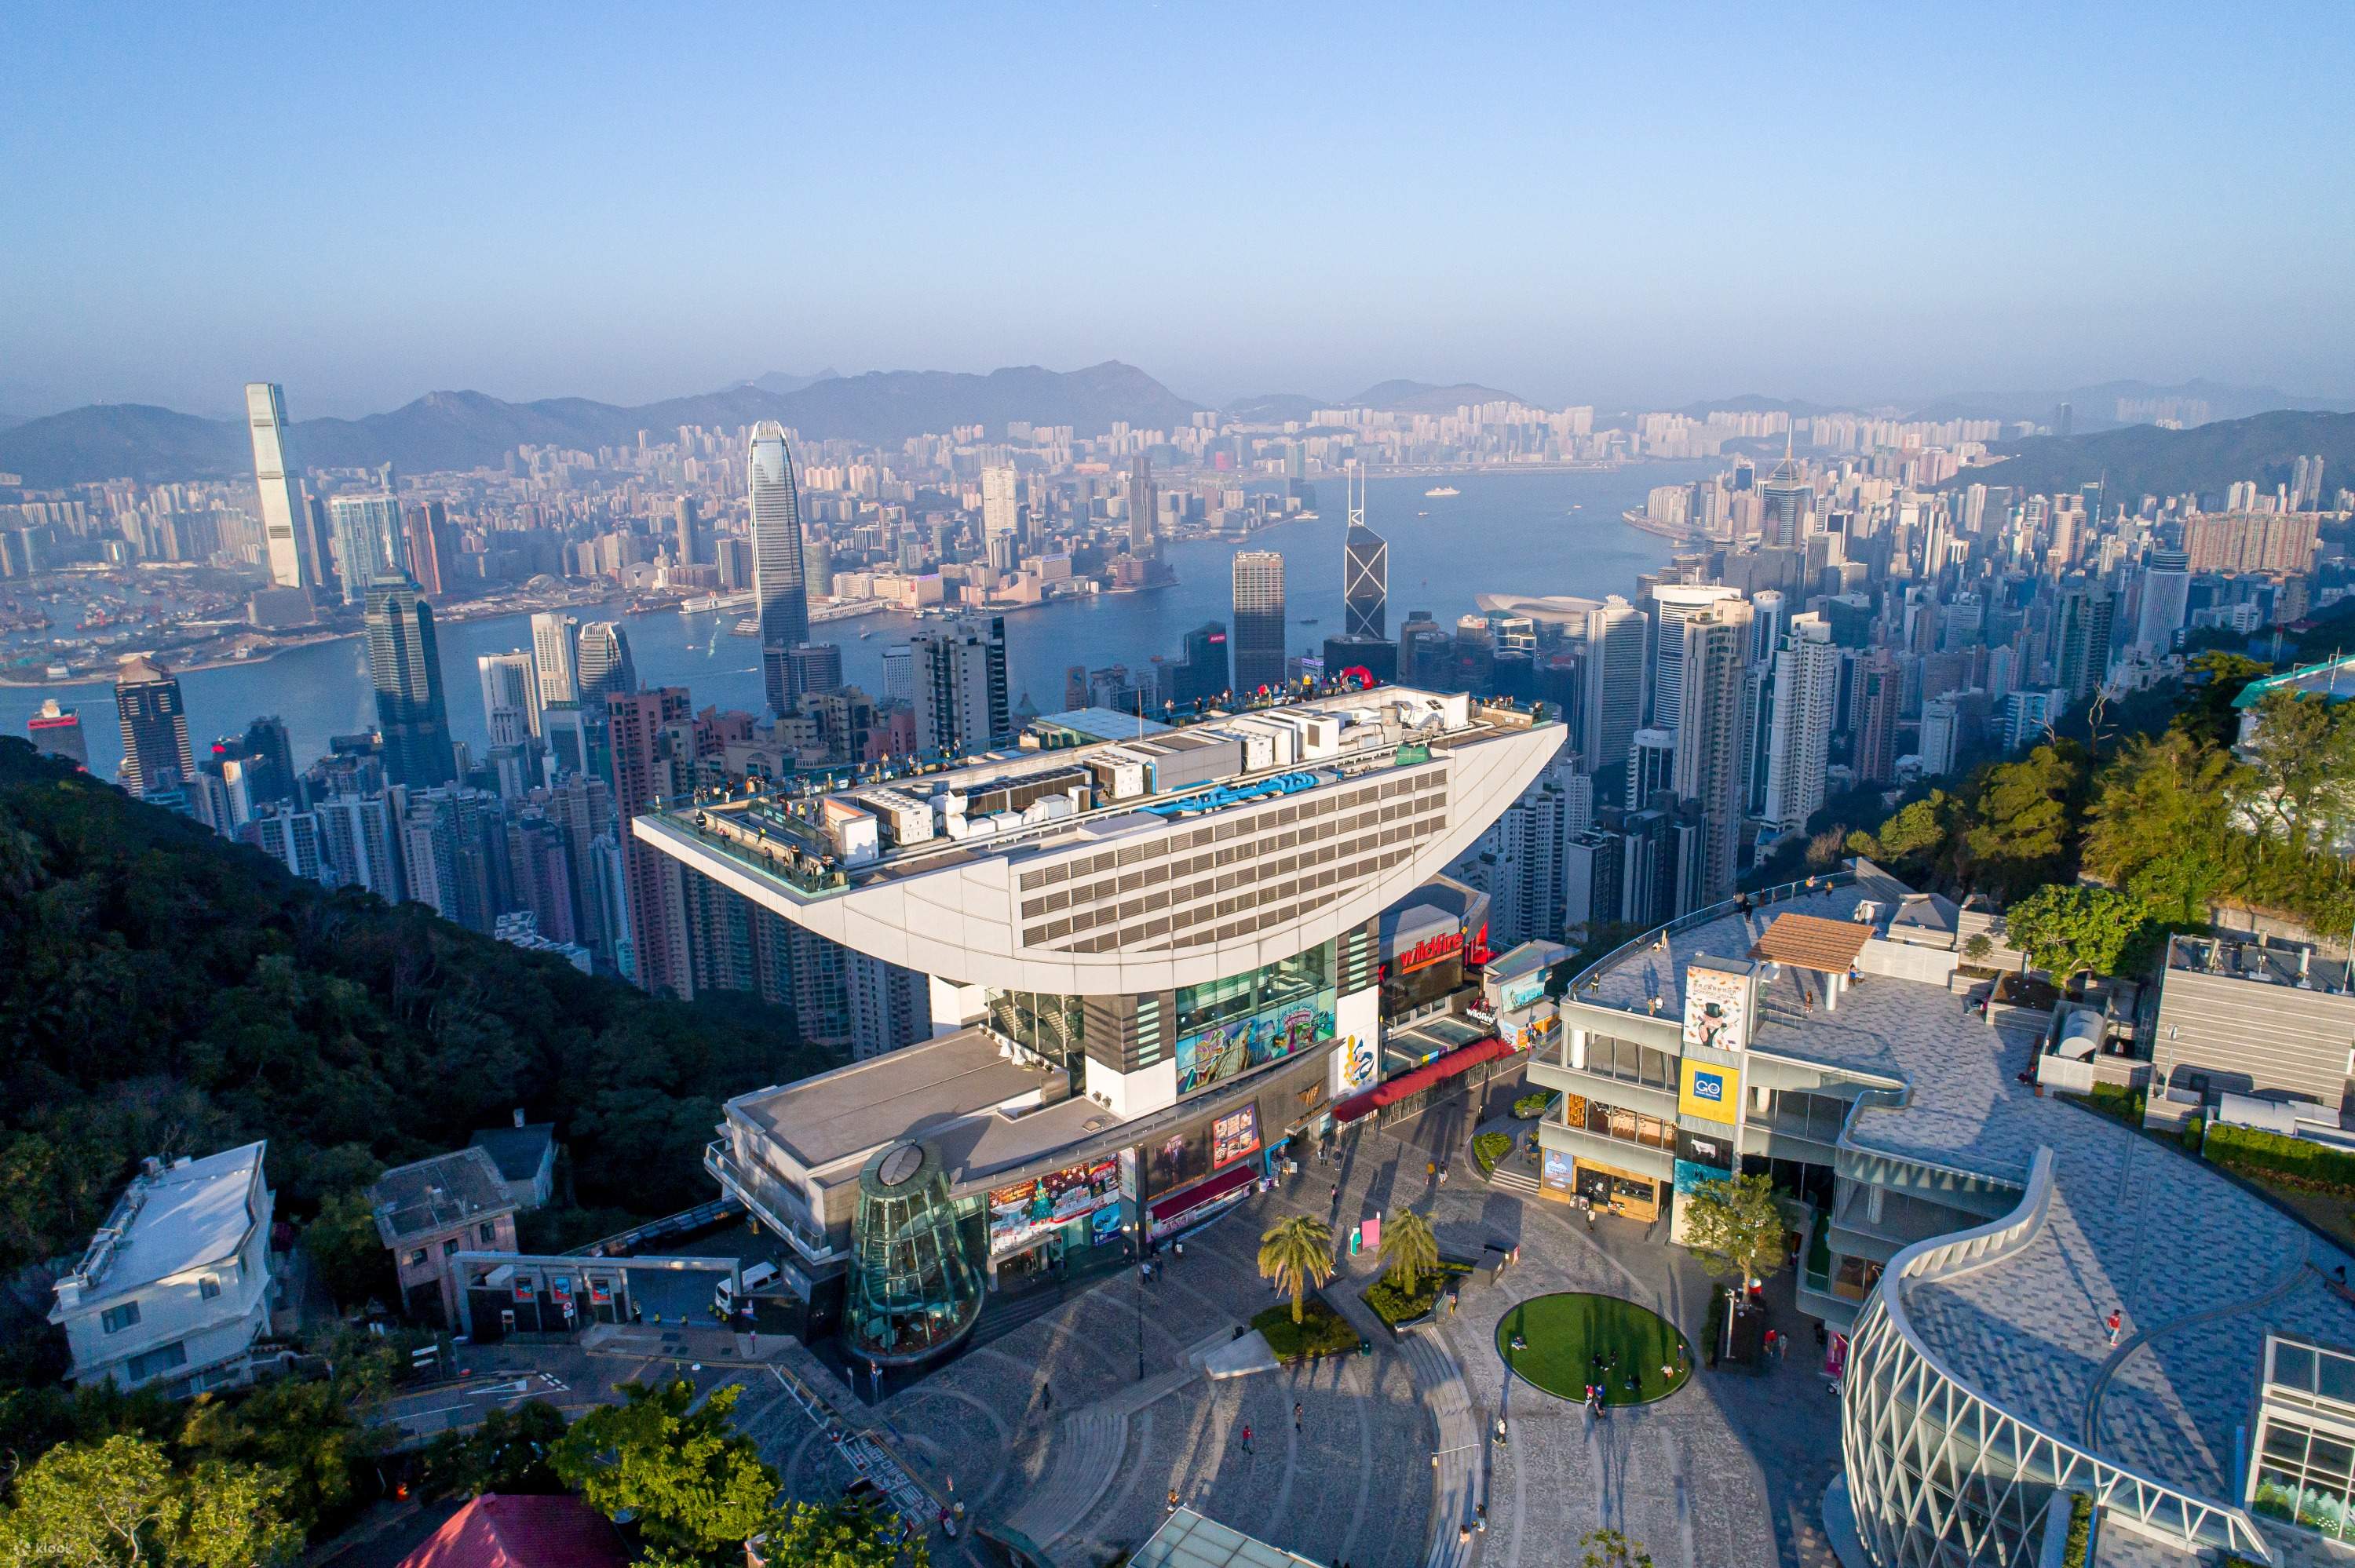 Skip the Line Victoria Peak Admission 2023 - Hong Kong SAR